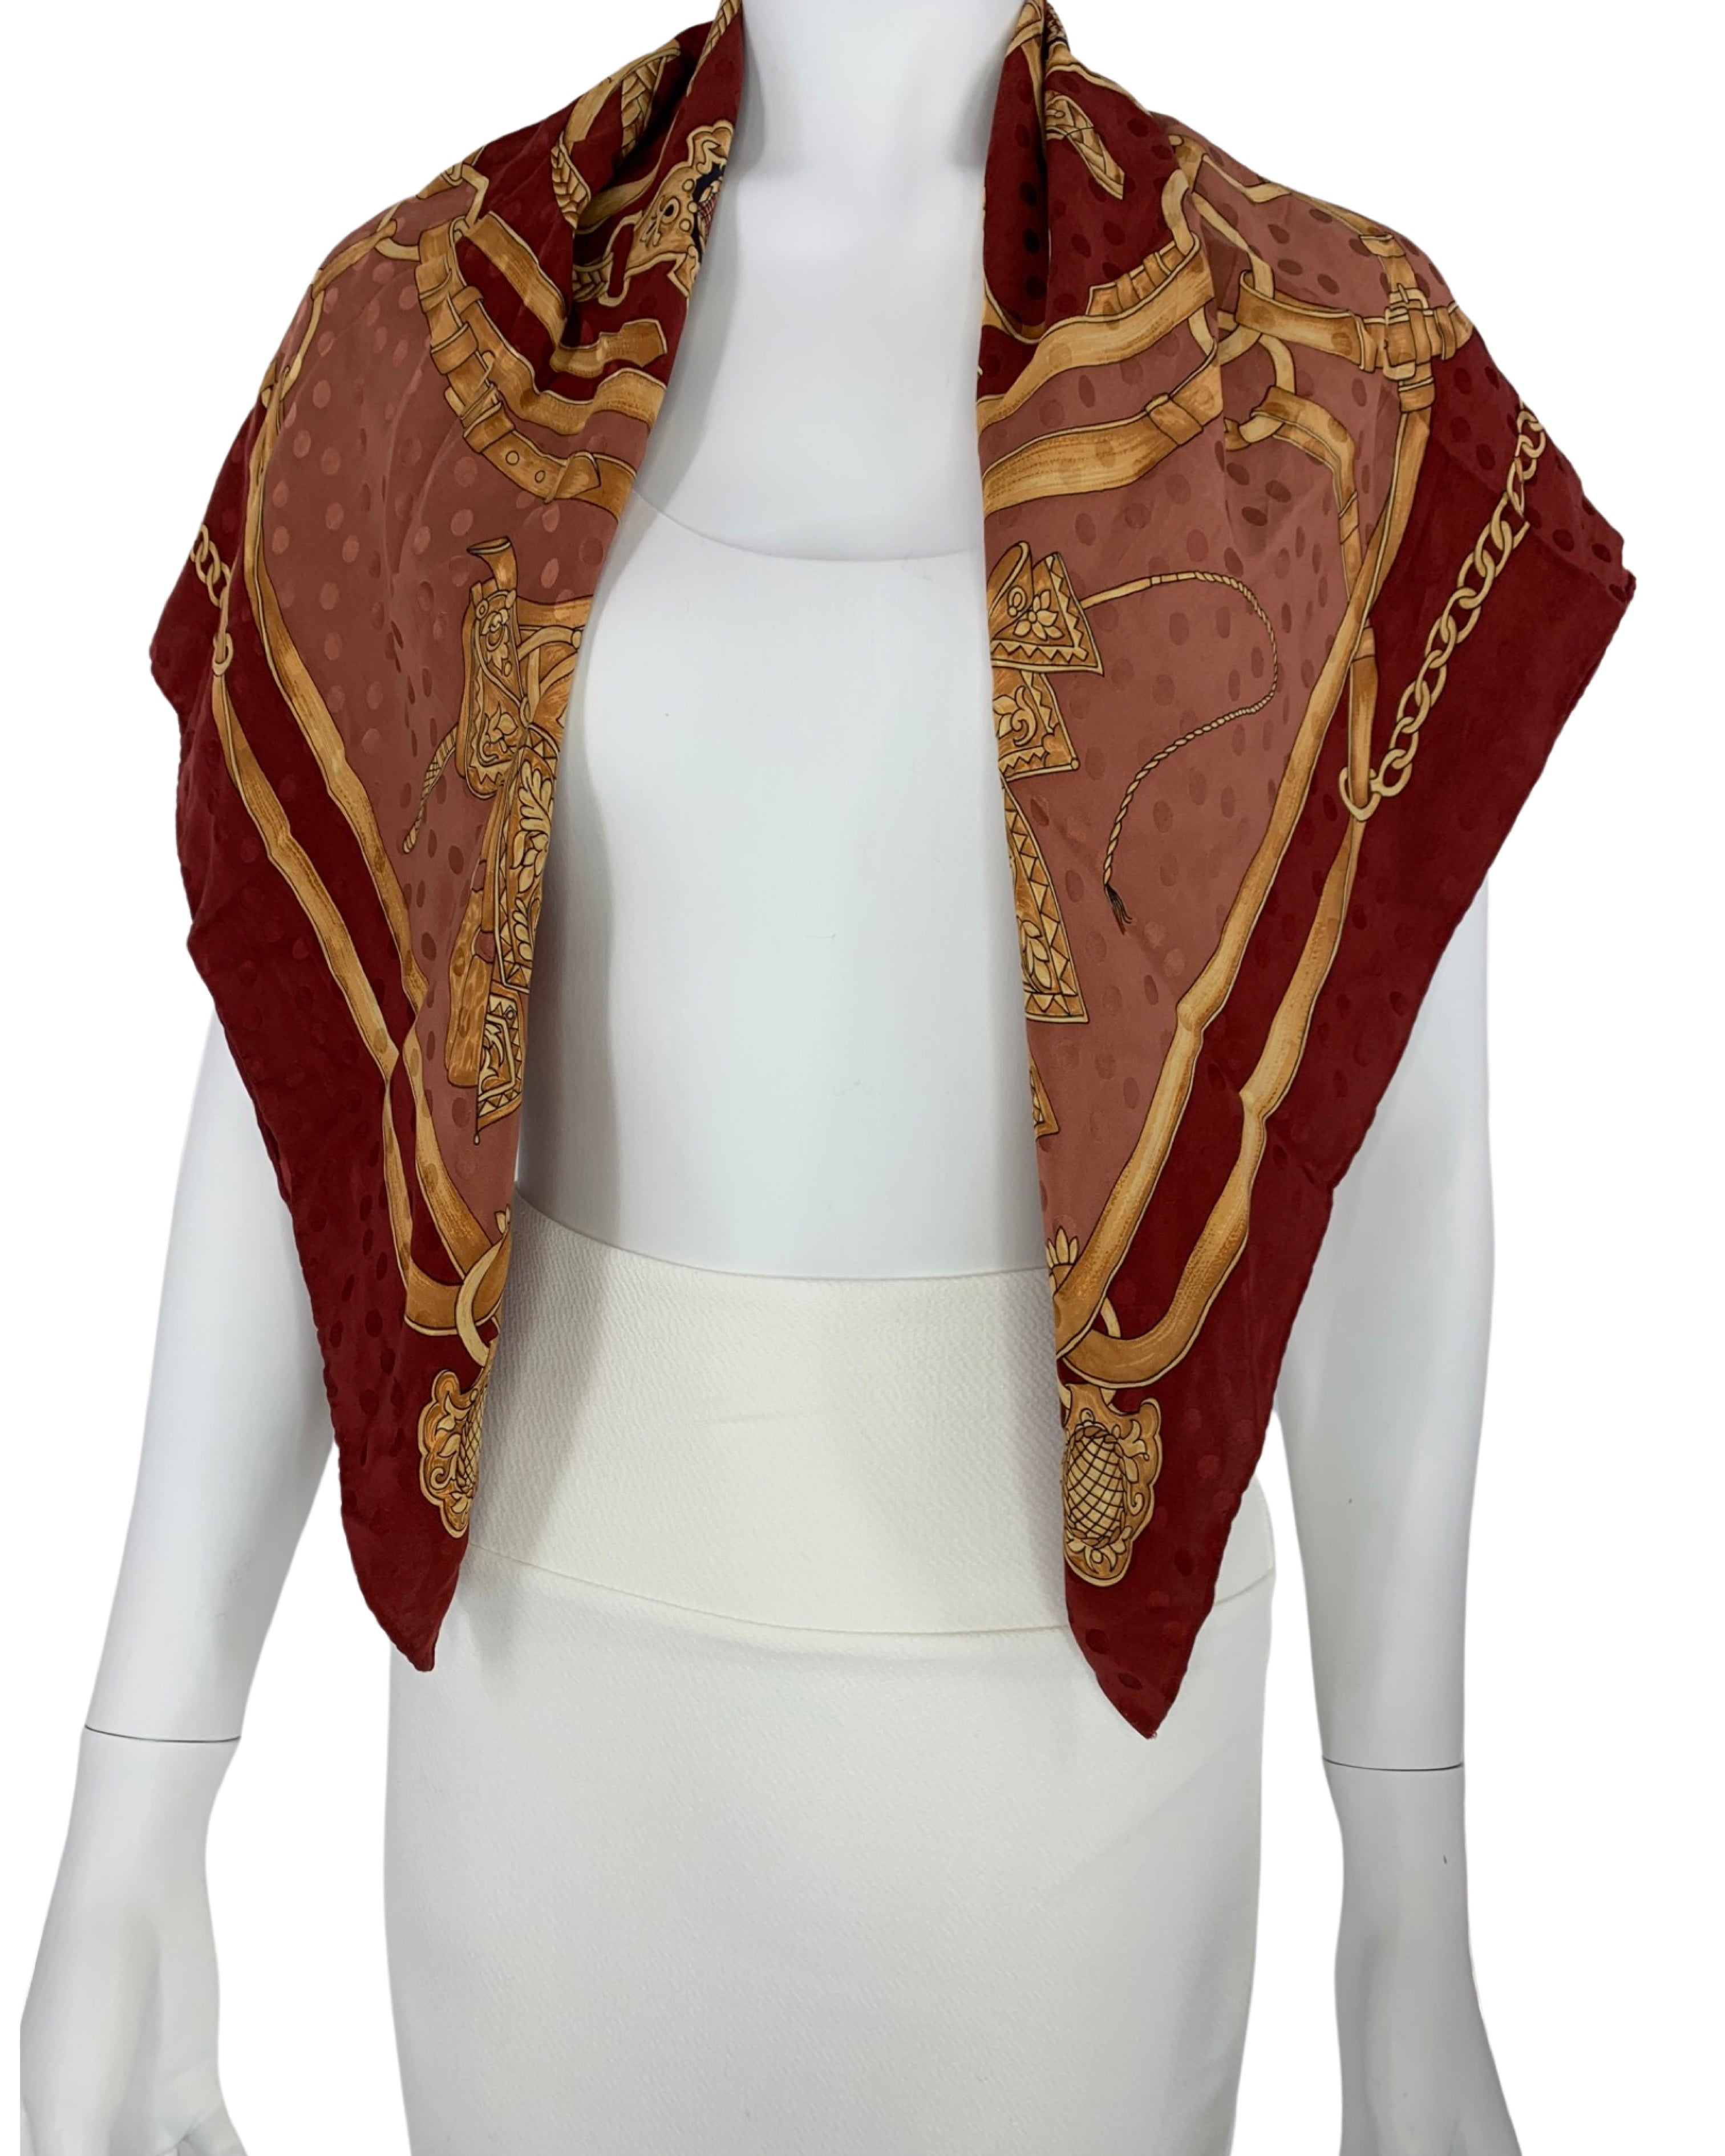 Beautiful 34" x 34" silk scarf